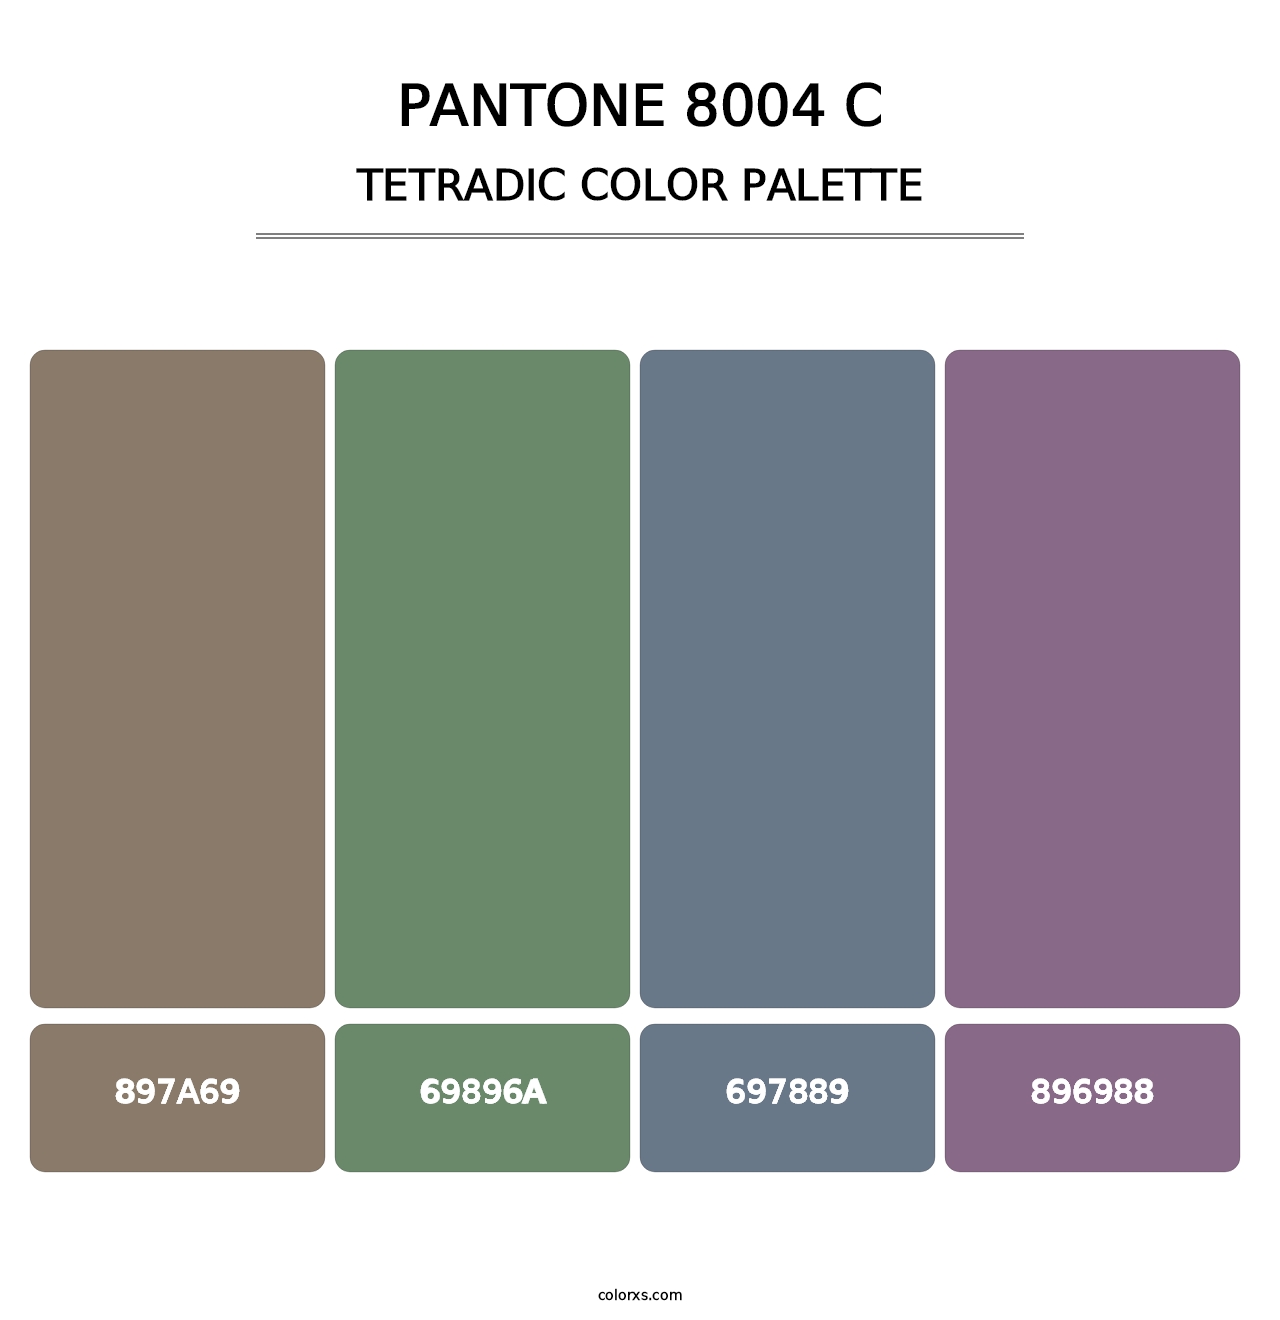 PANTONE 8004 C - Tetradic Color Palette